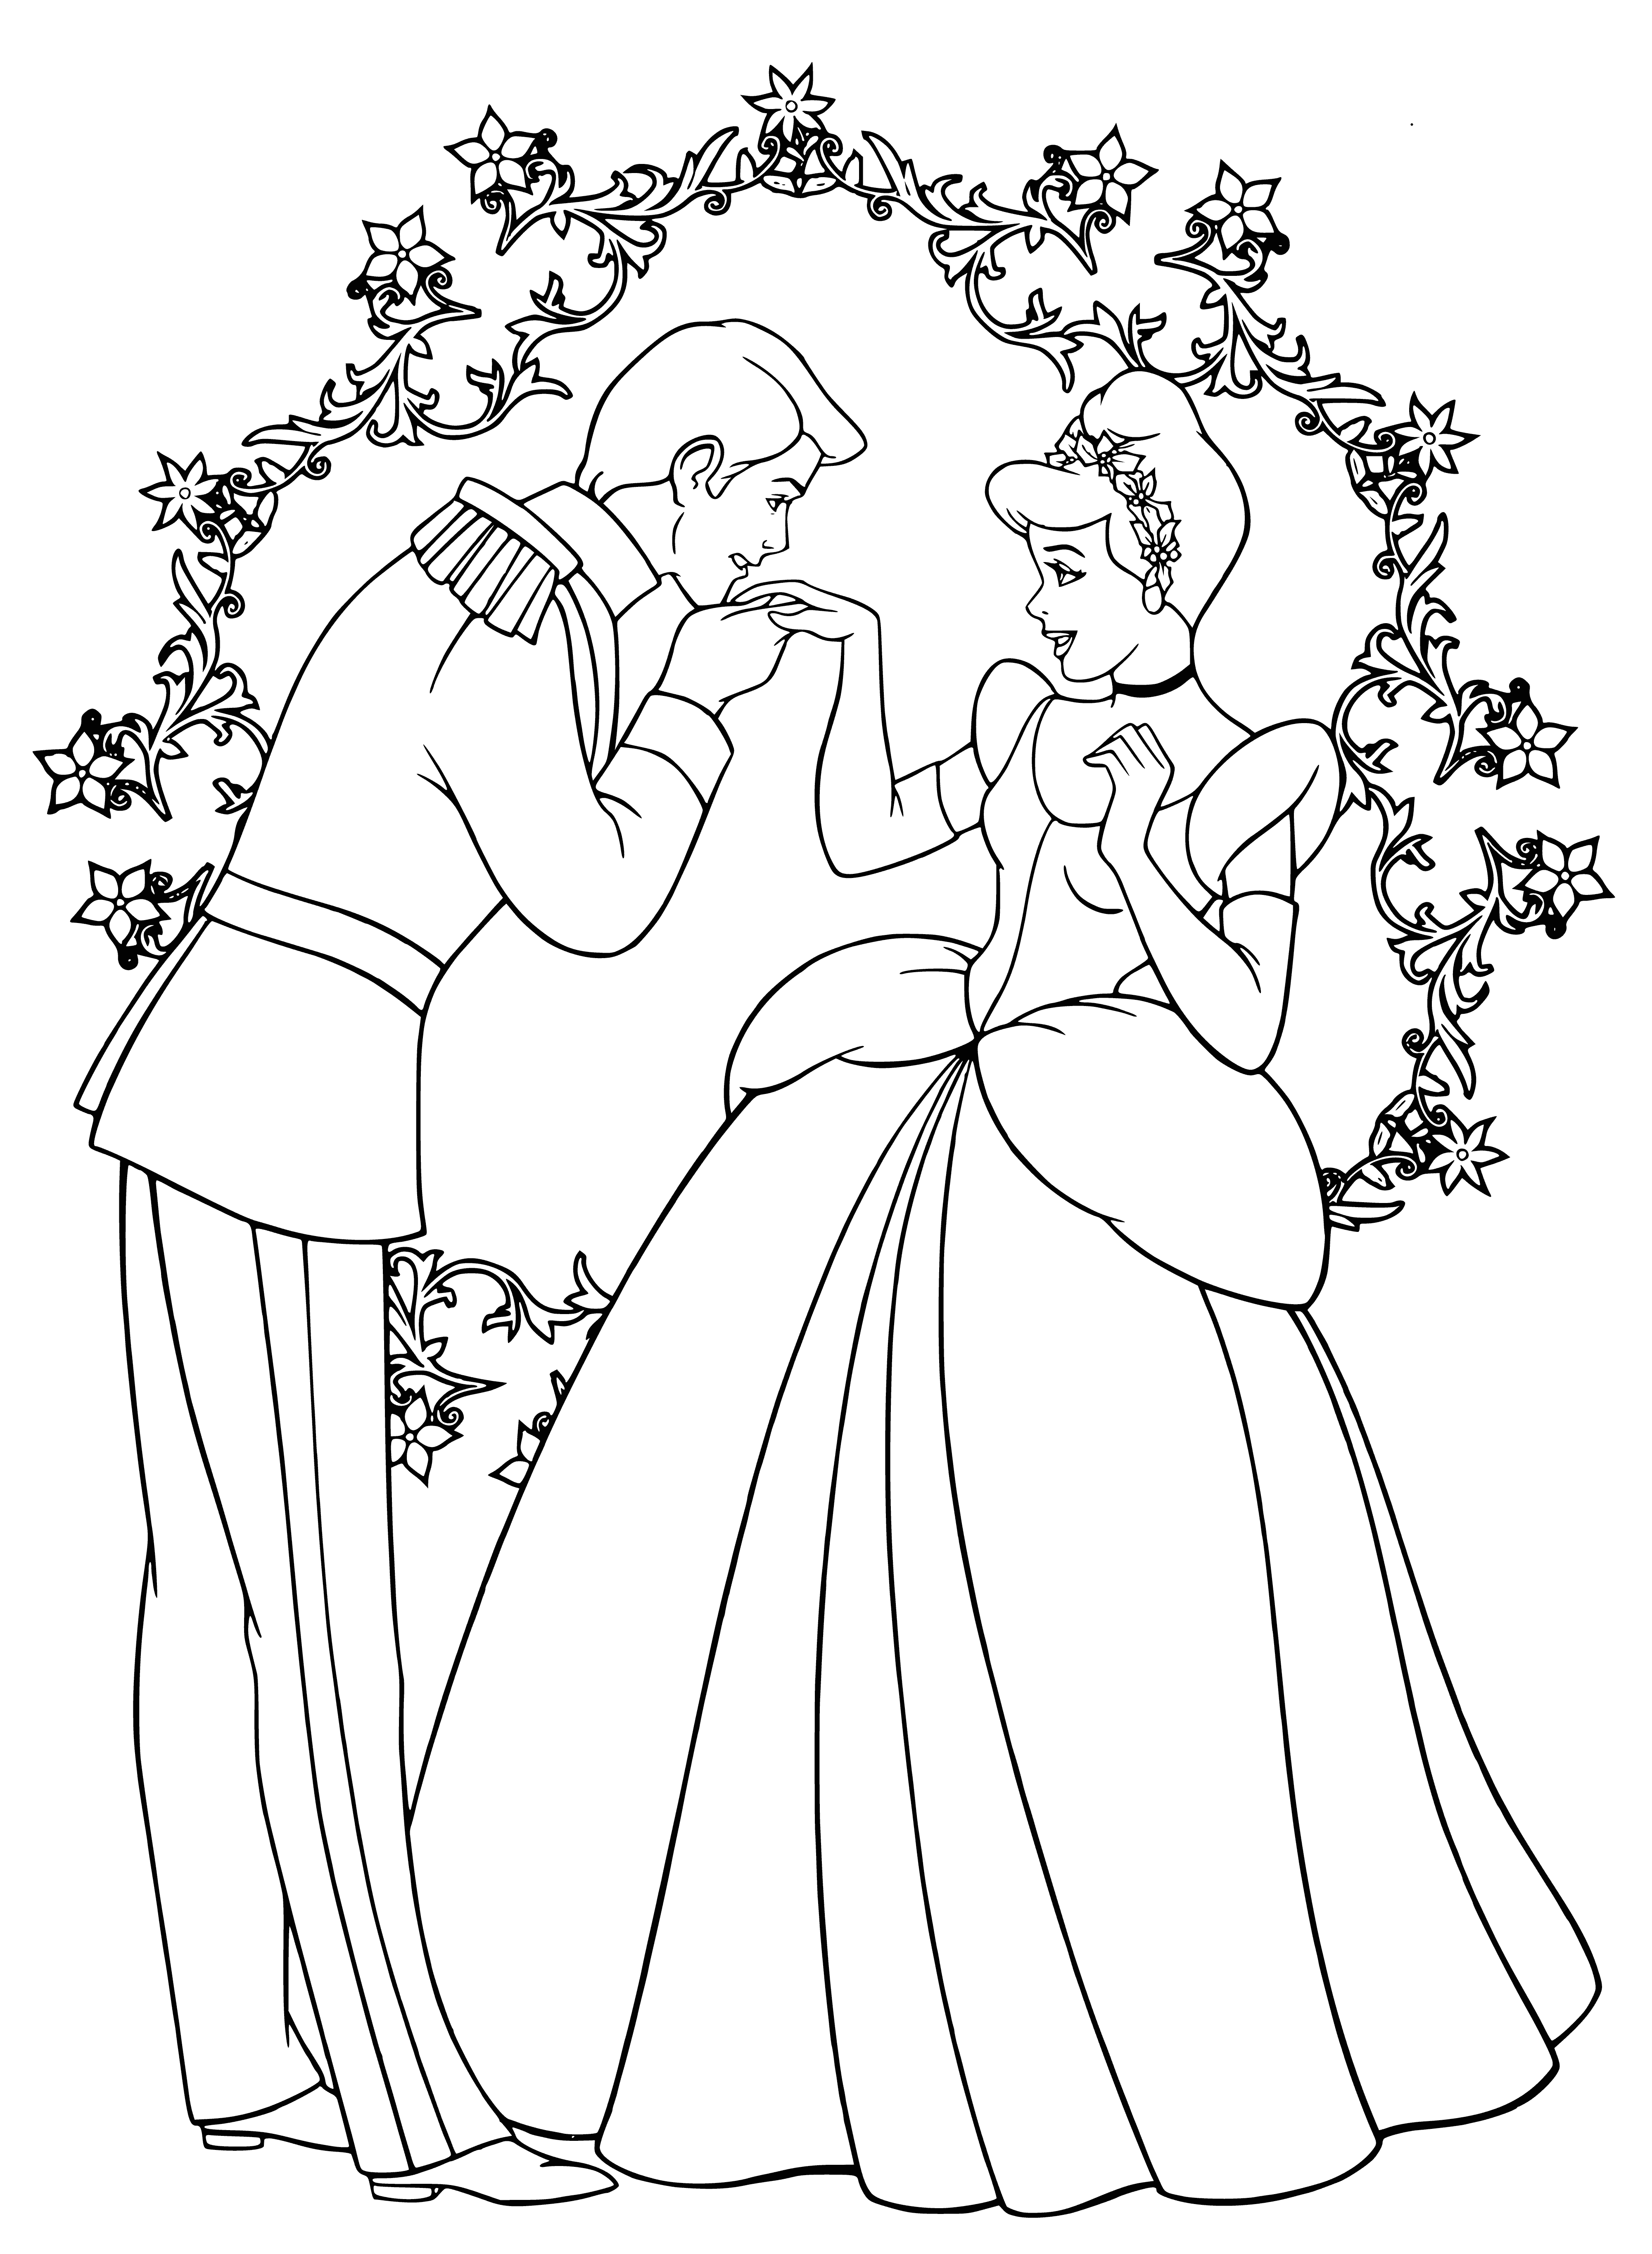 Cinderella and prince coloring page